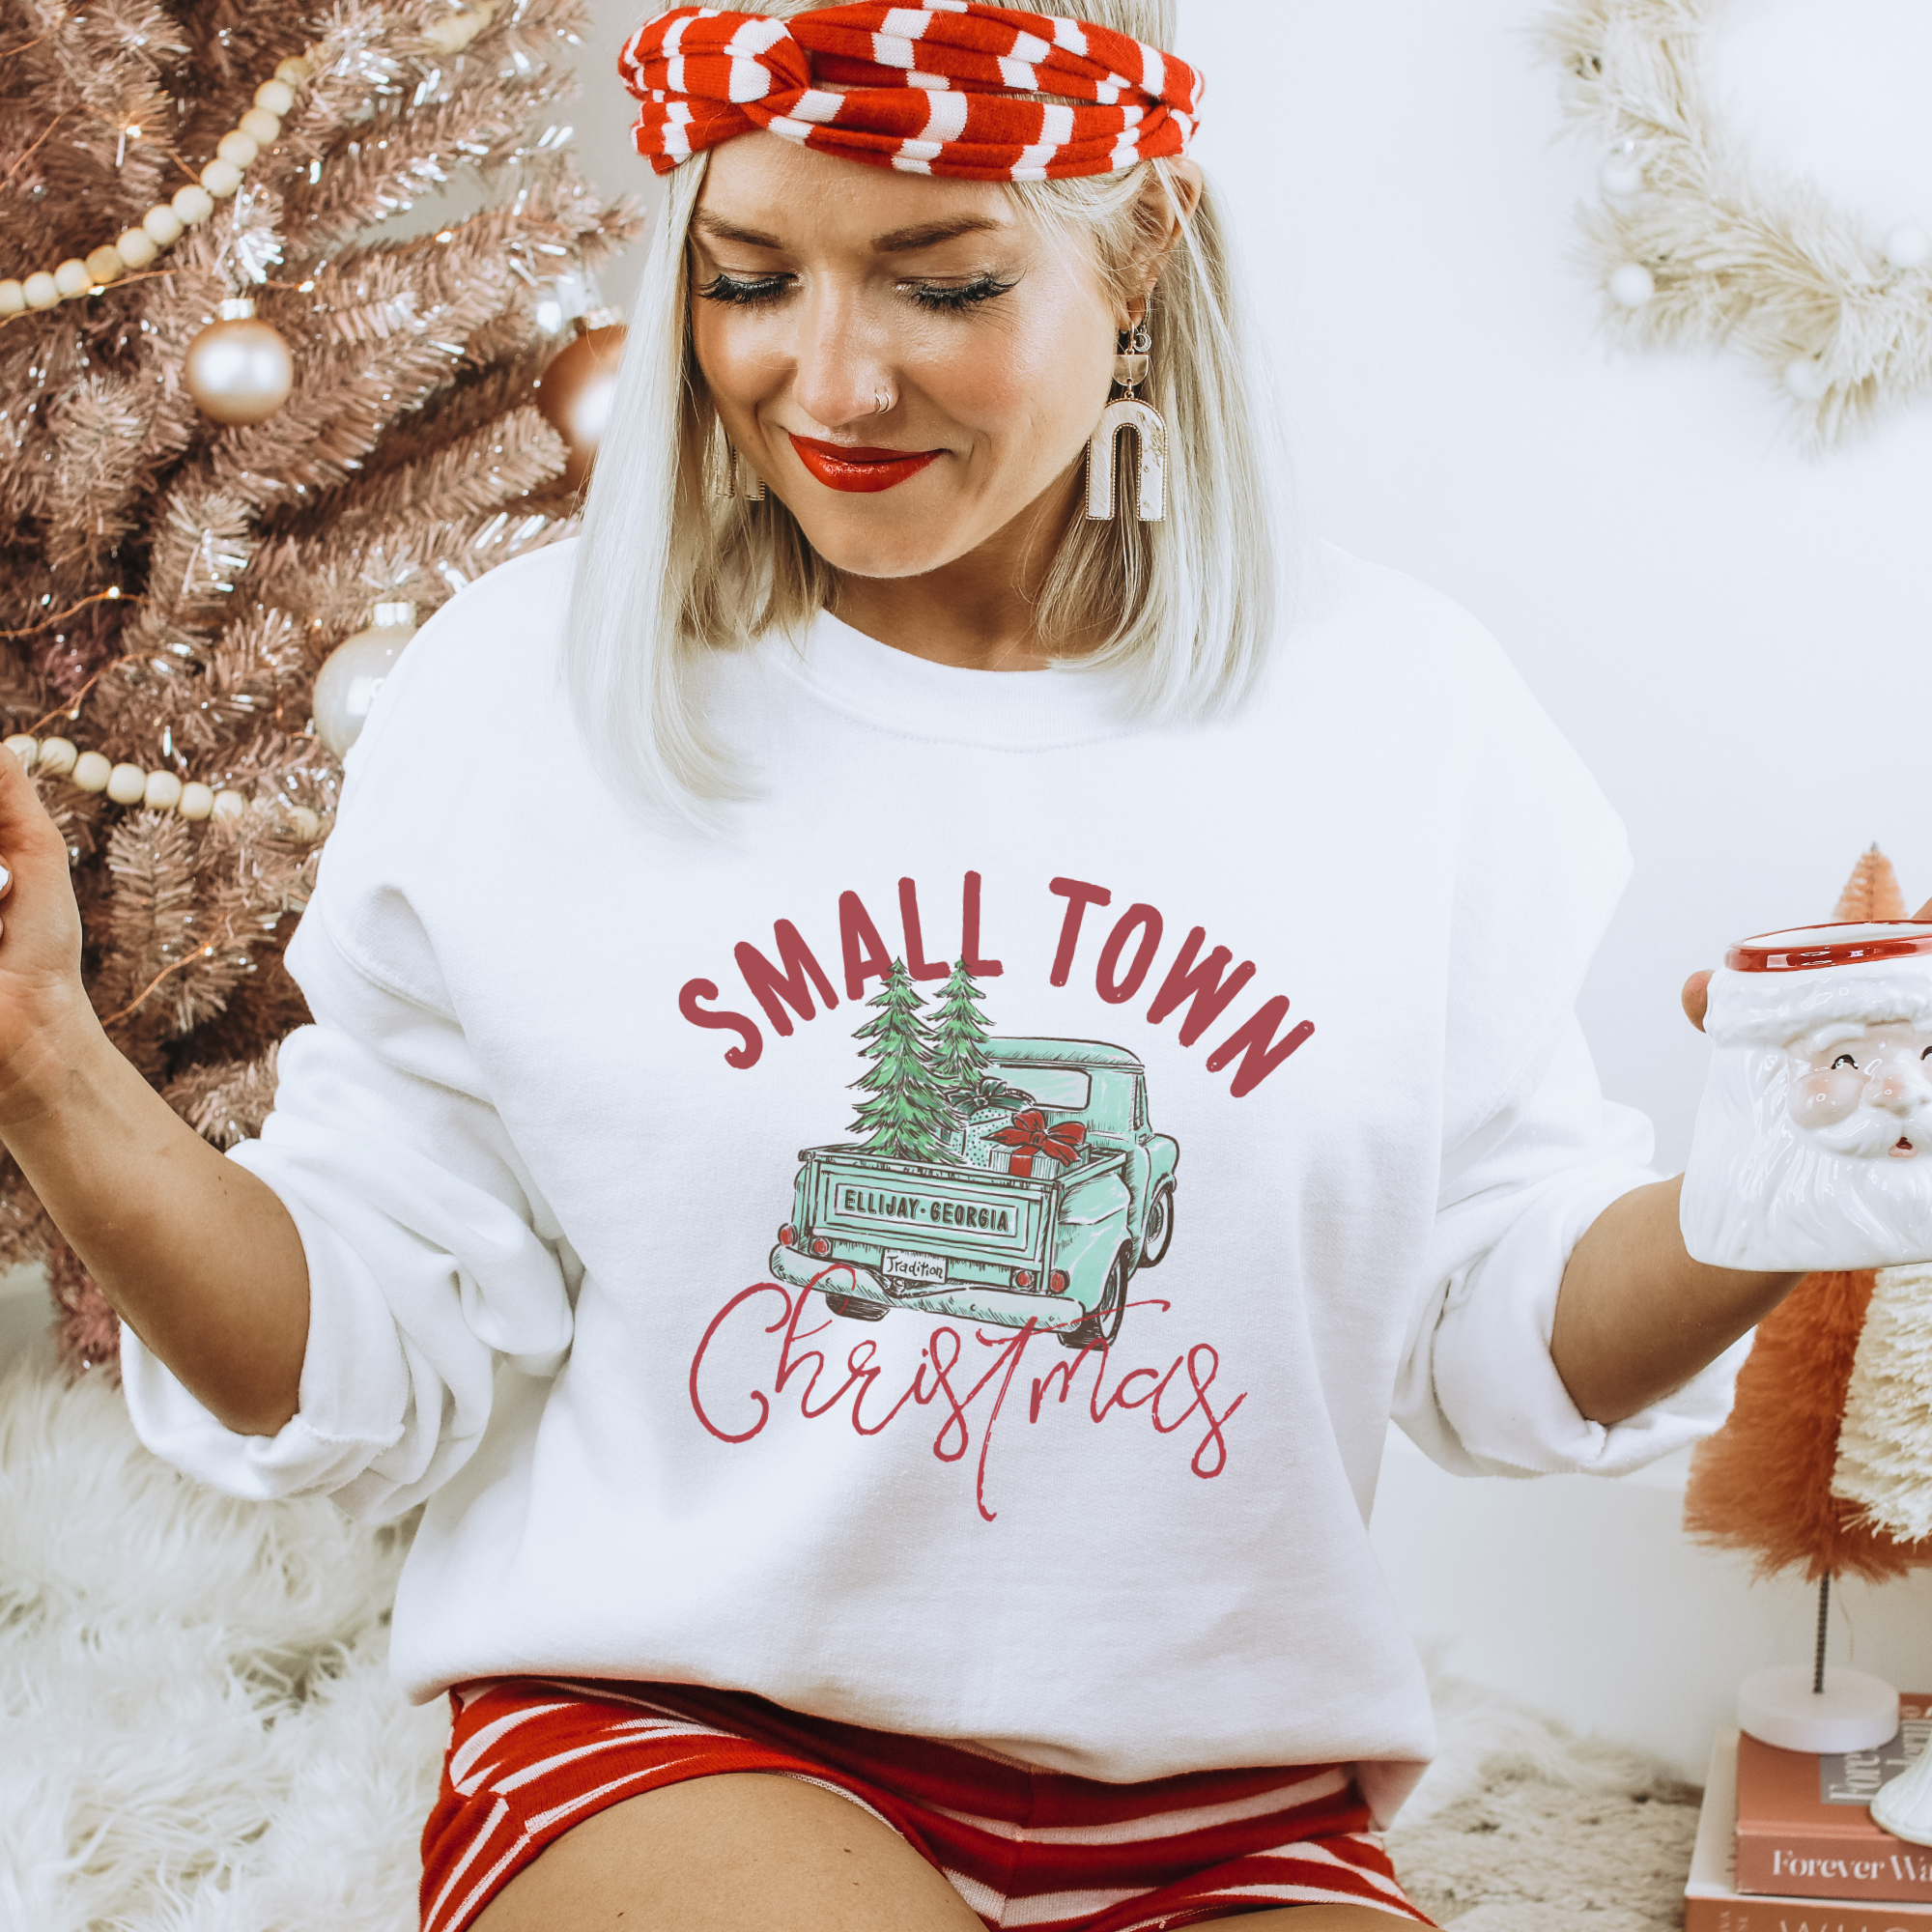 Small Town Christmas Sweatshirt